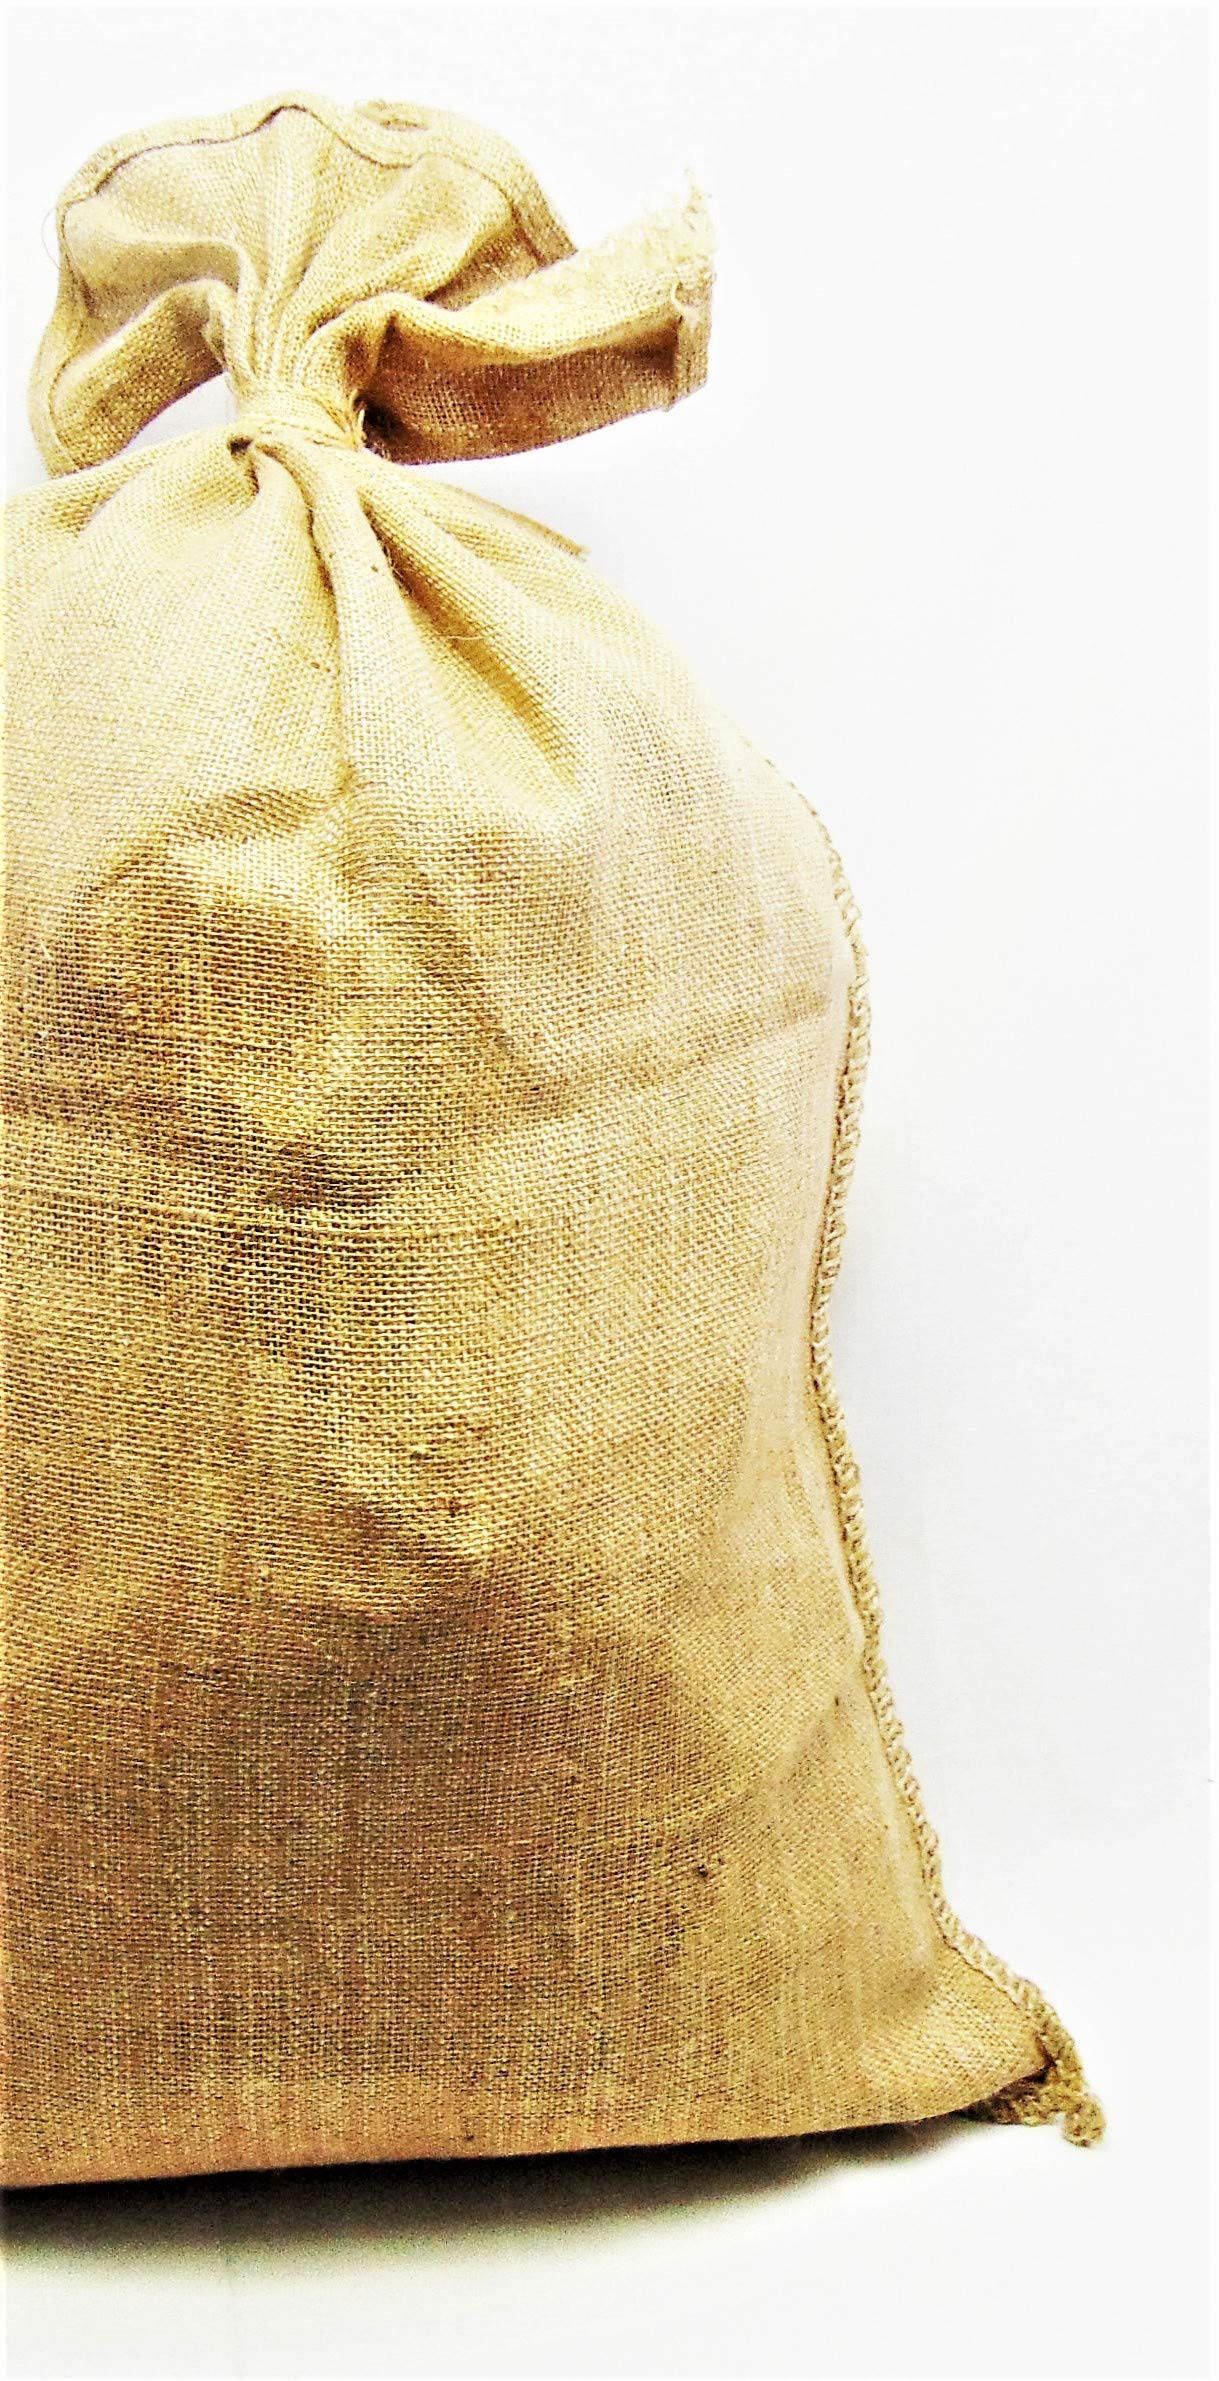 AAYU Large Burlap Sacks 14 x 26 Inch Jute Drawstring Bags for Potato Onion Vegetables Coffee Beans Adult Bag Races (20 Pack)